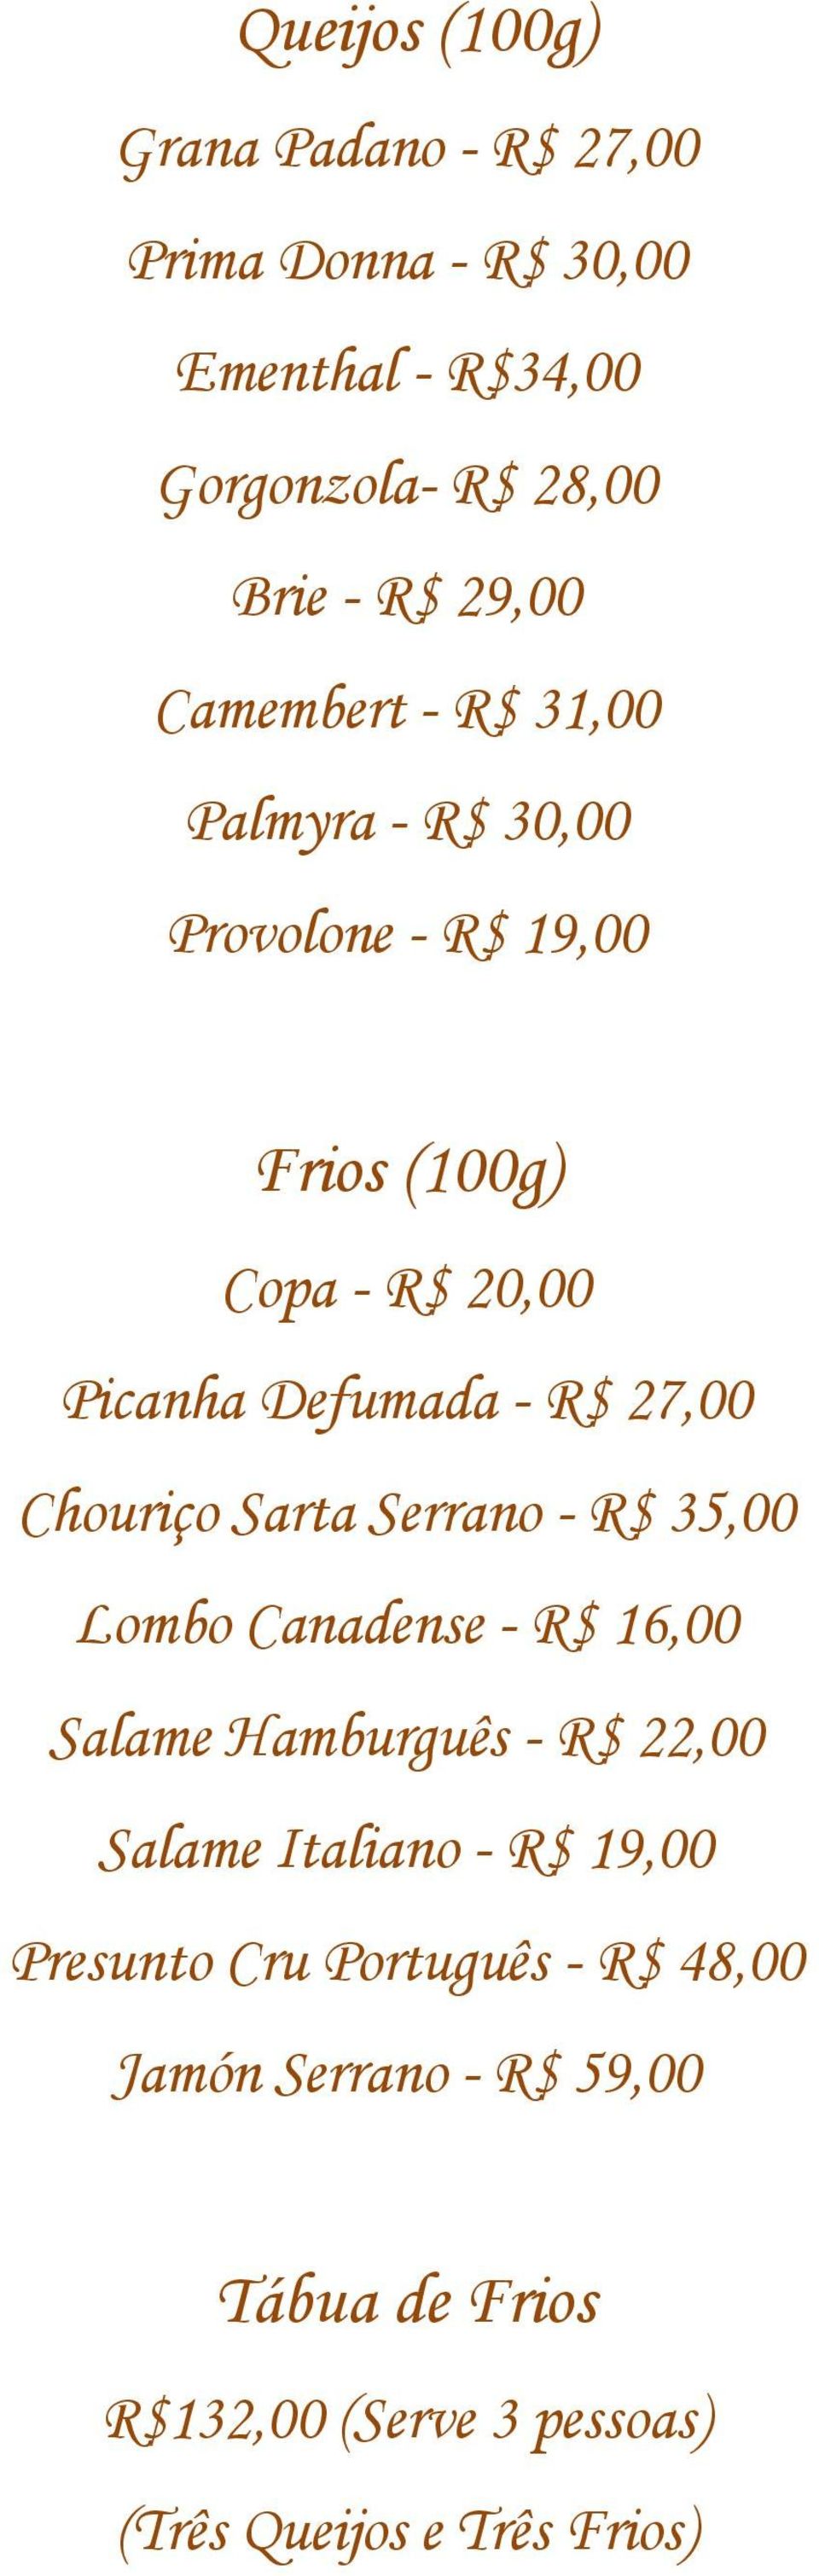 Chouriço Sarta Serrano - R$ 35,00 Lombo Canadense - R$ 16,00 Salame Hamburguês - R$ 22,00 Salame Italiano - R$ 19,00